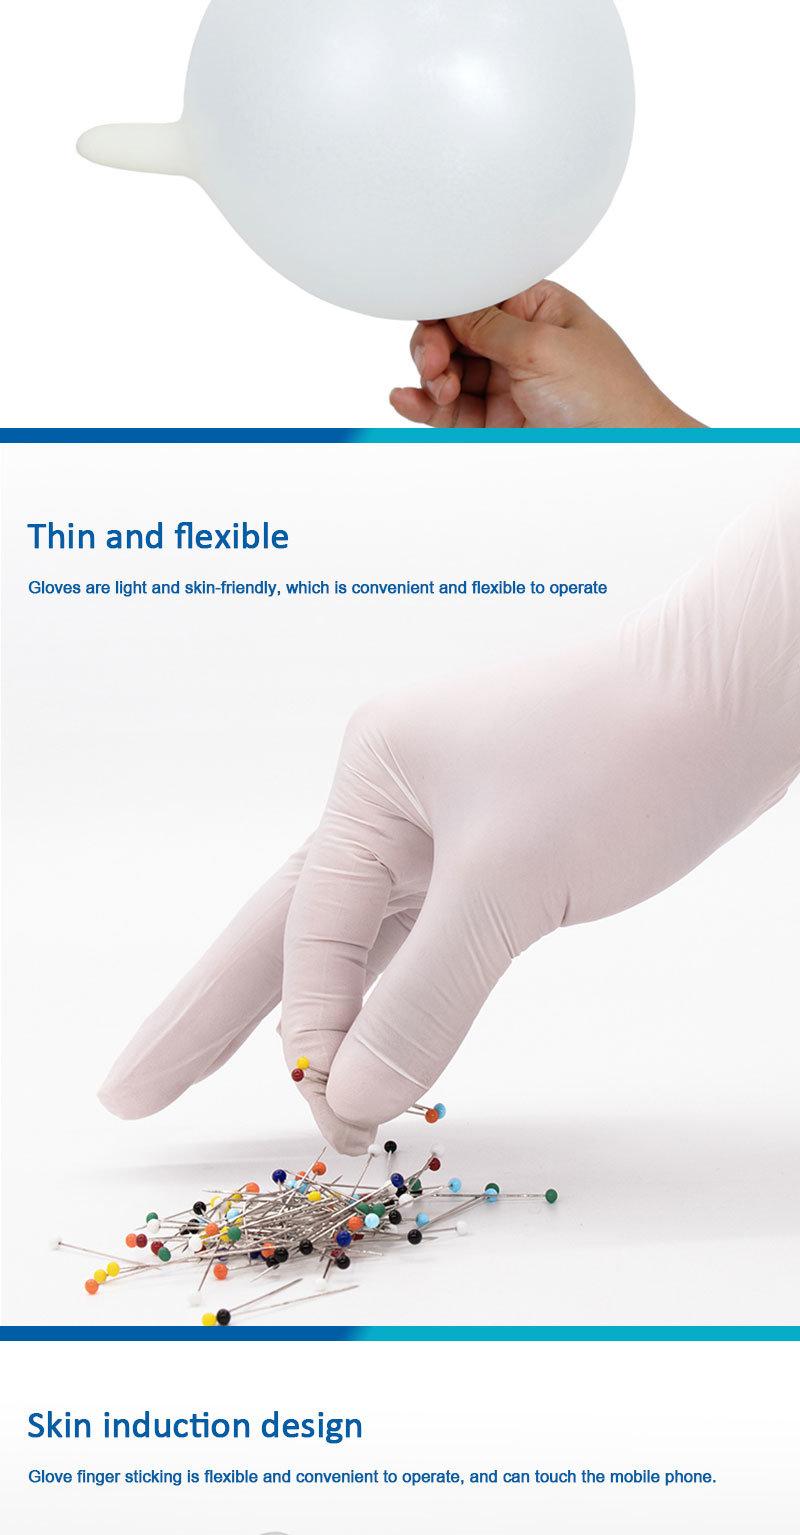 Wholesale China Powder Free Safeguard Food Grade Latex Latex White Examination Disposable Latex Gloves